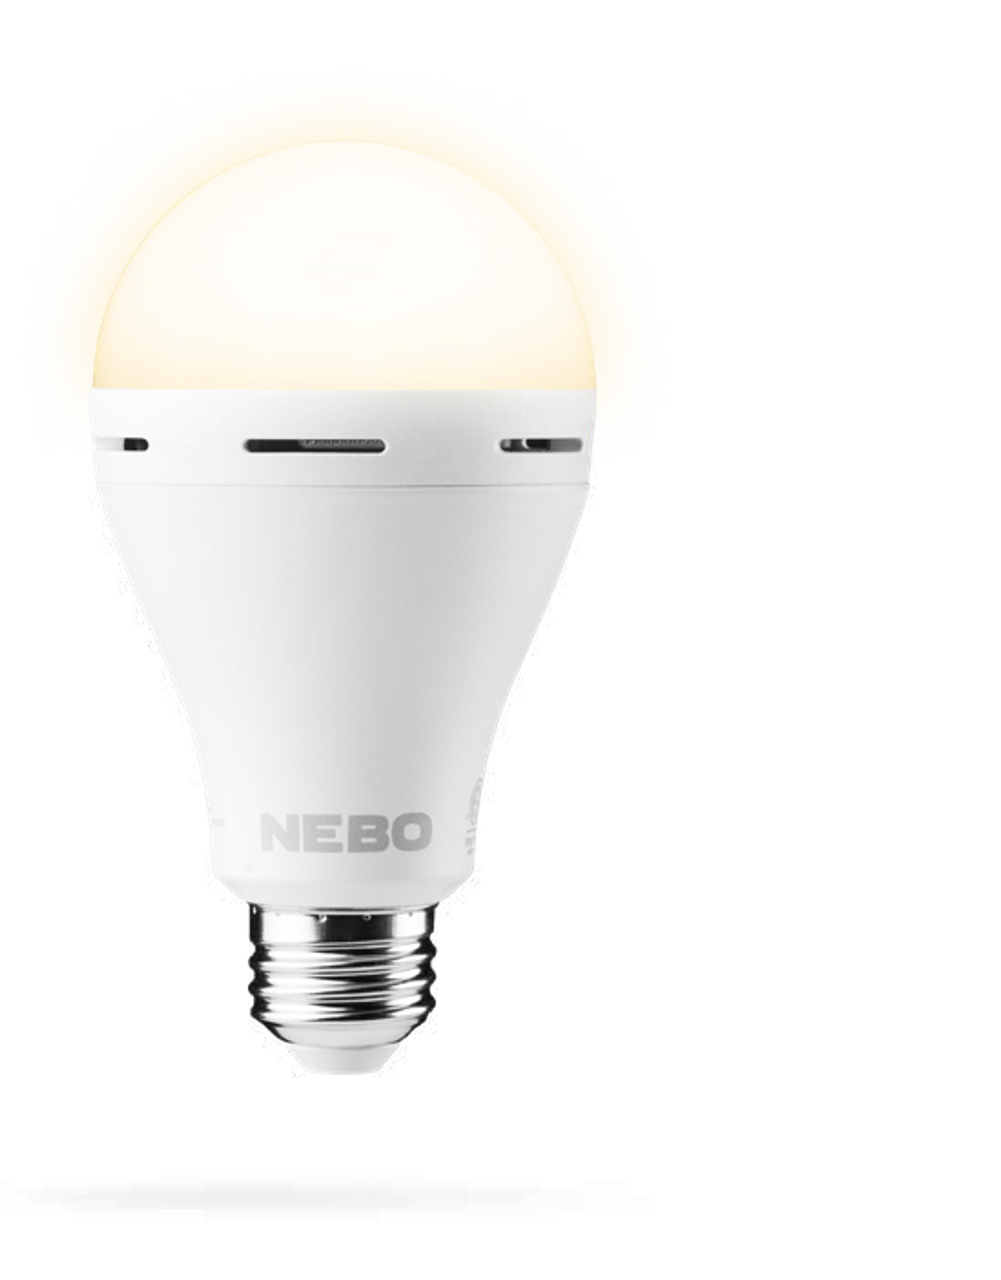 Blackout Backup Emergency Bulb